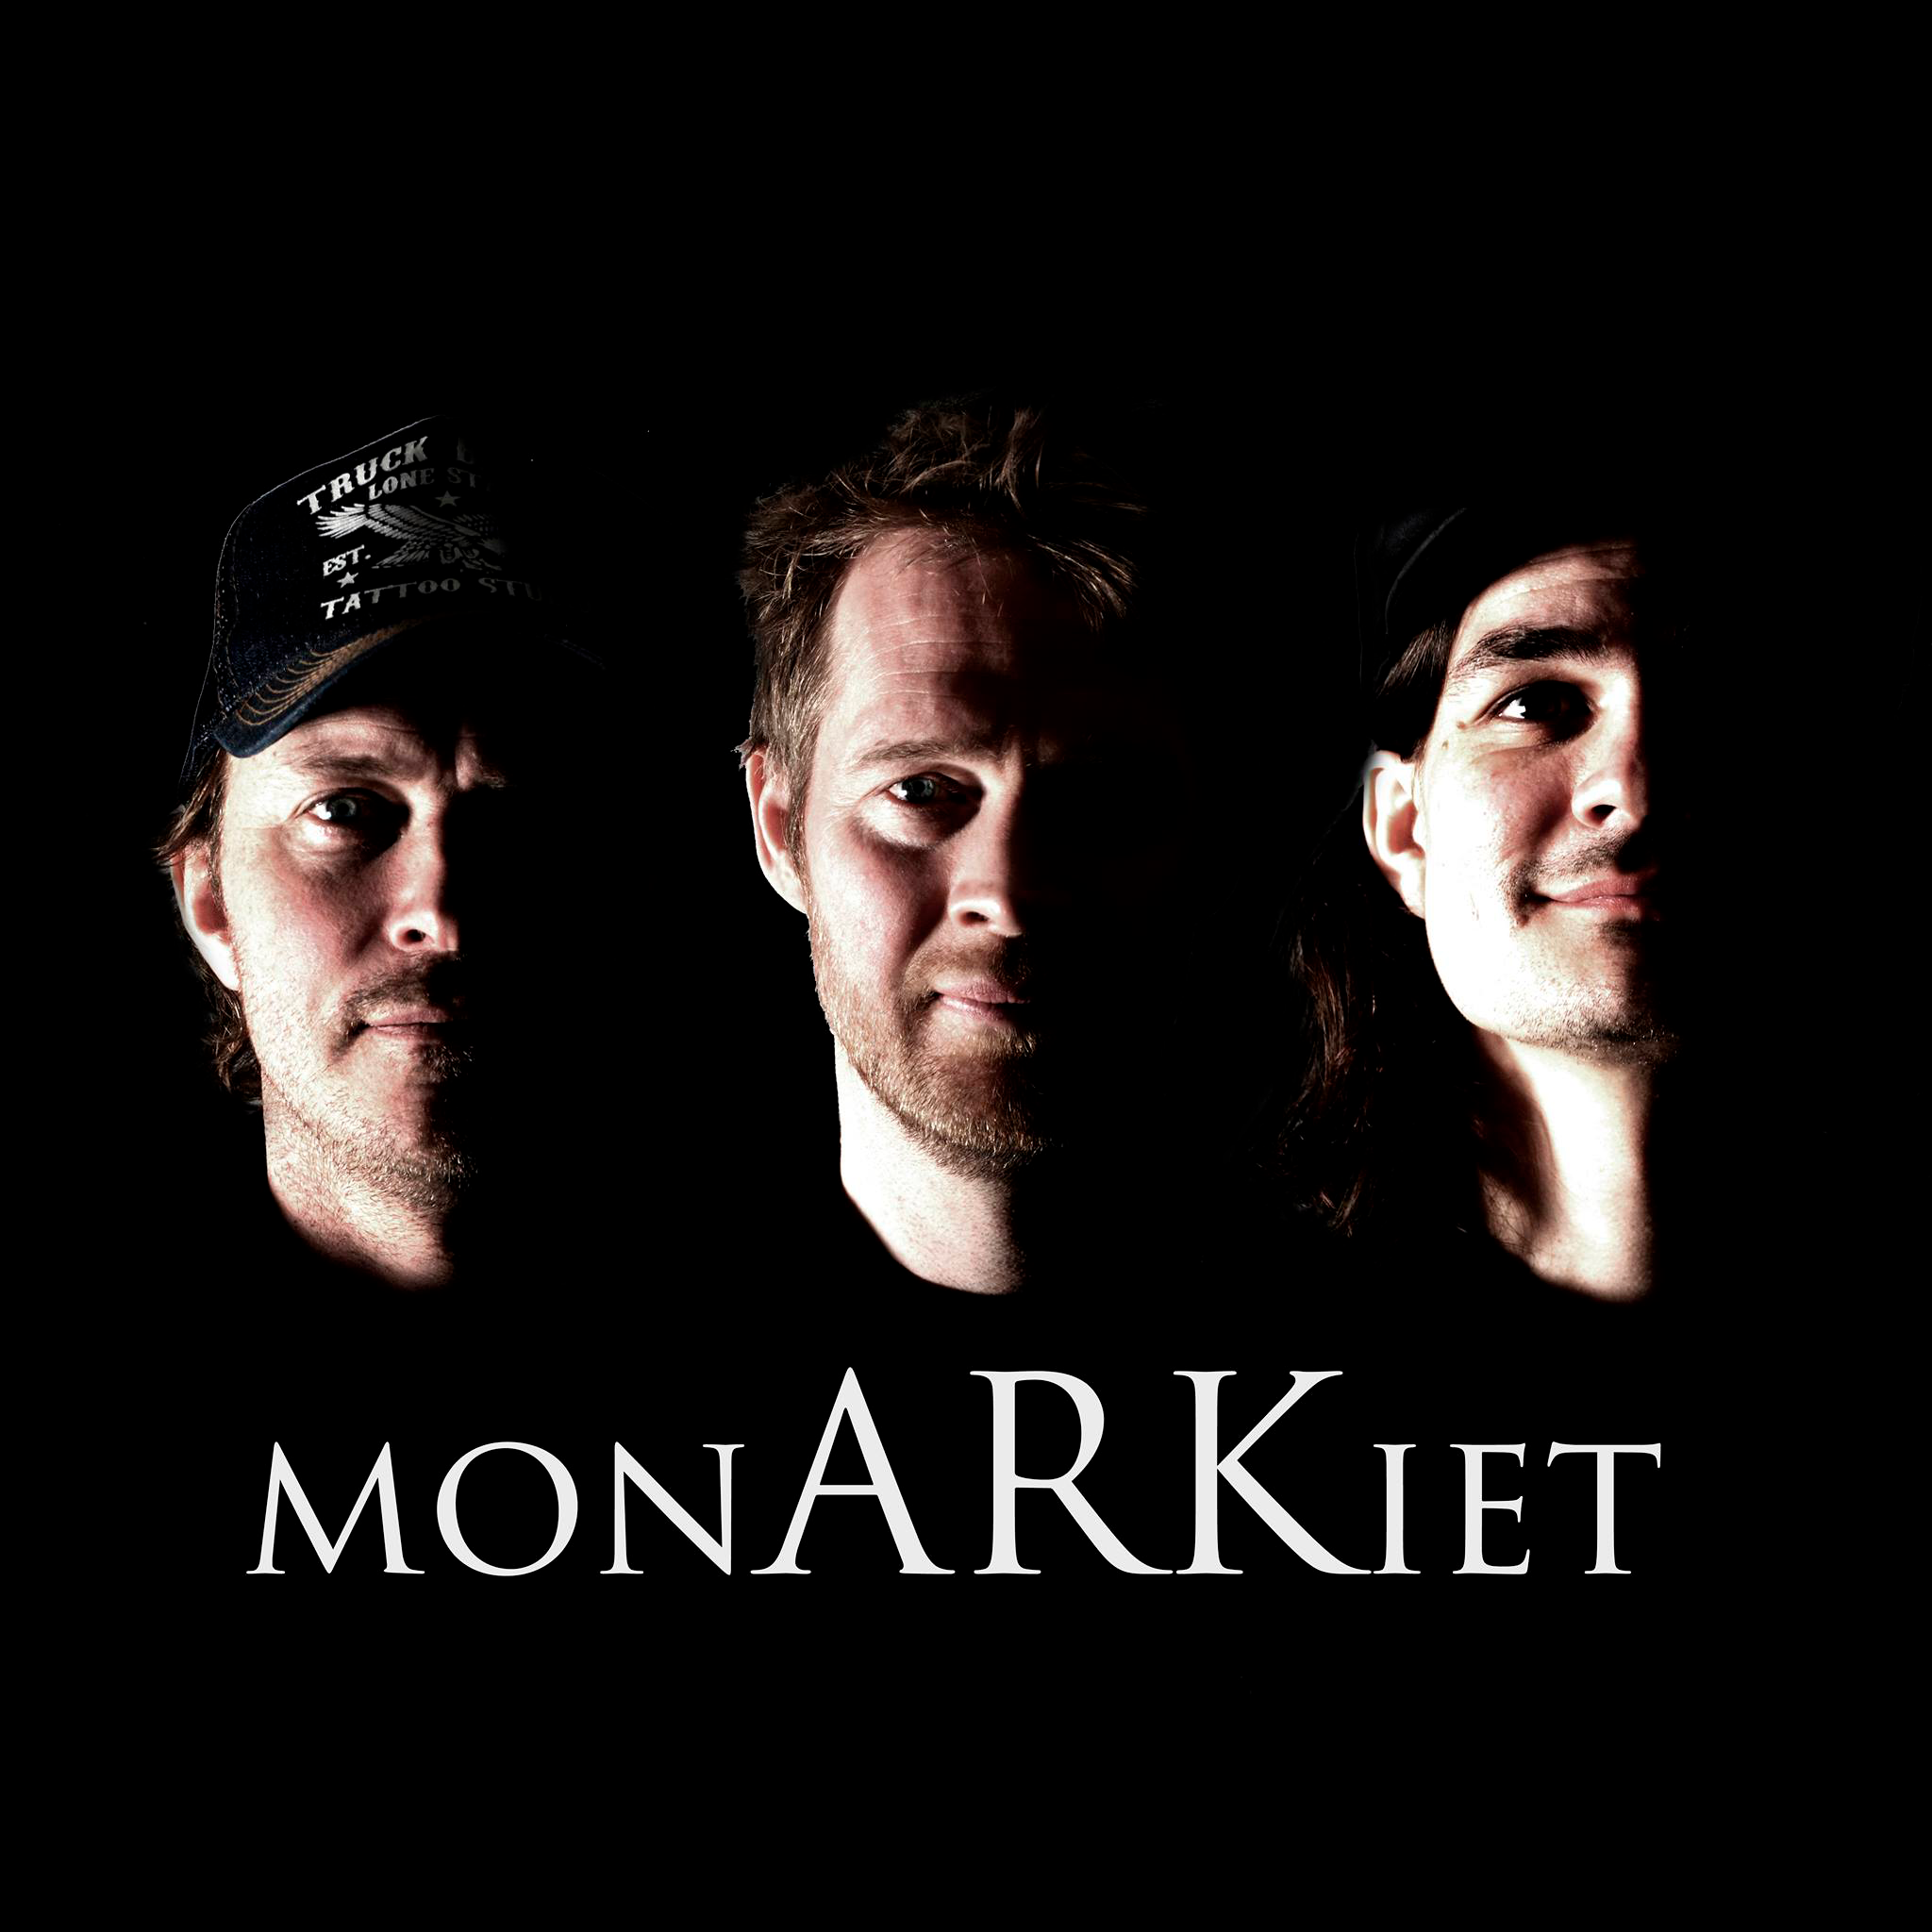 MonARKiet faces